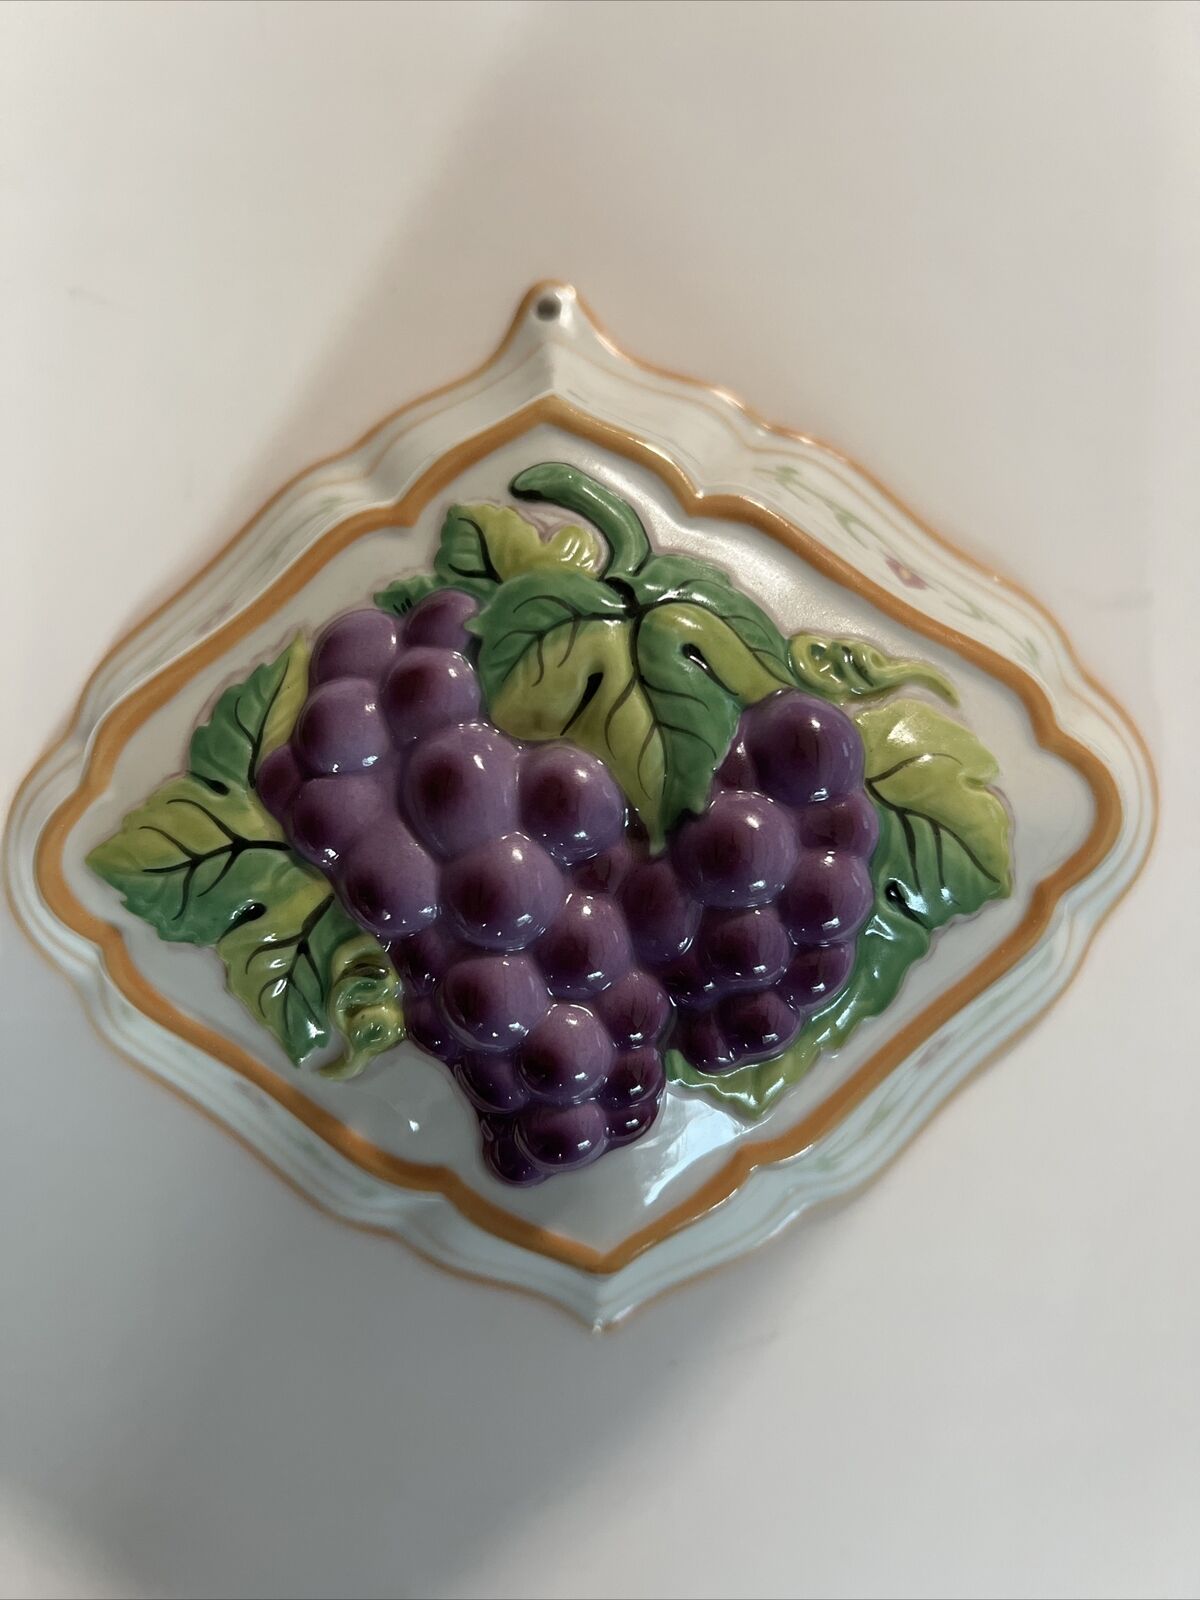 Franklin Mint Le Cordon Bleu Glazed Ceramic Jello Mold Harvest Grapes 1986